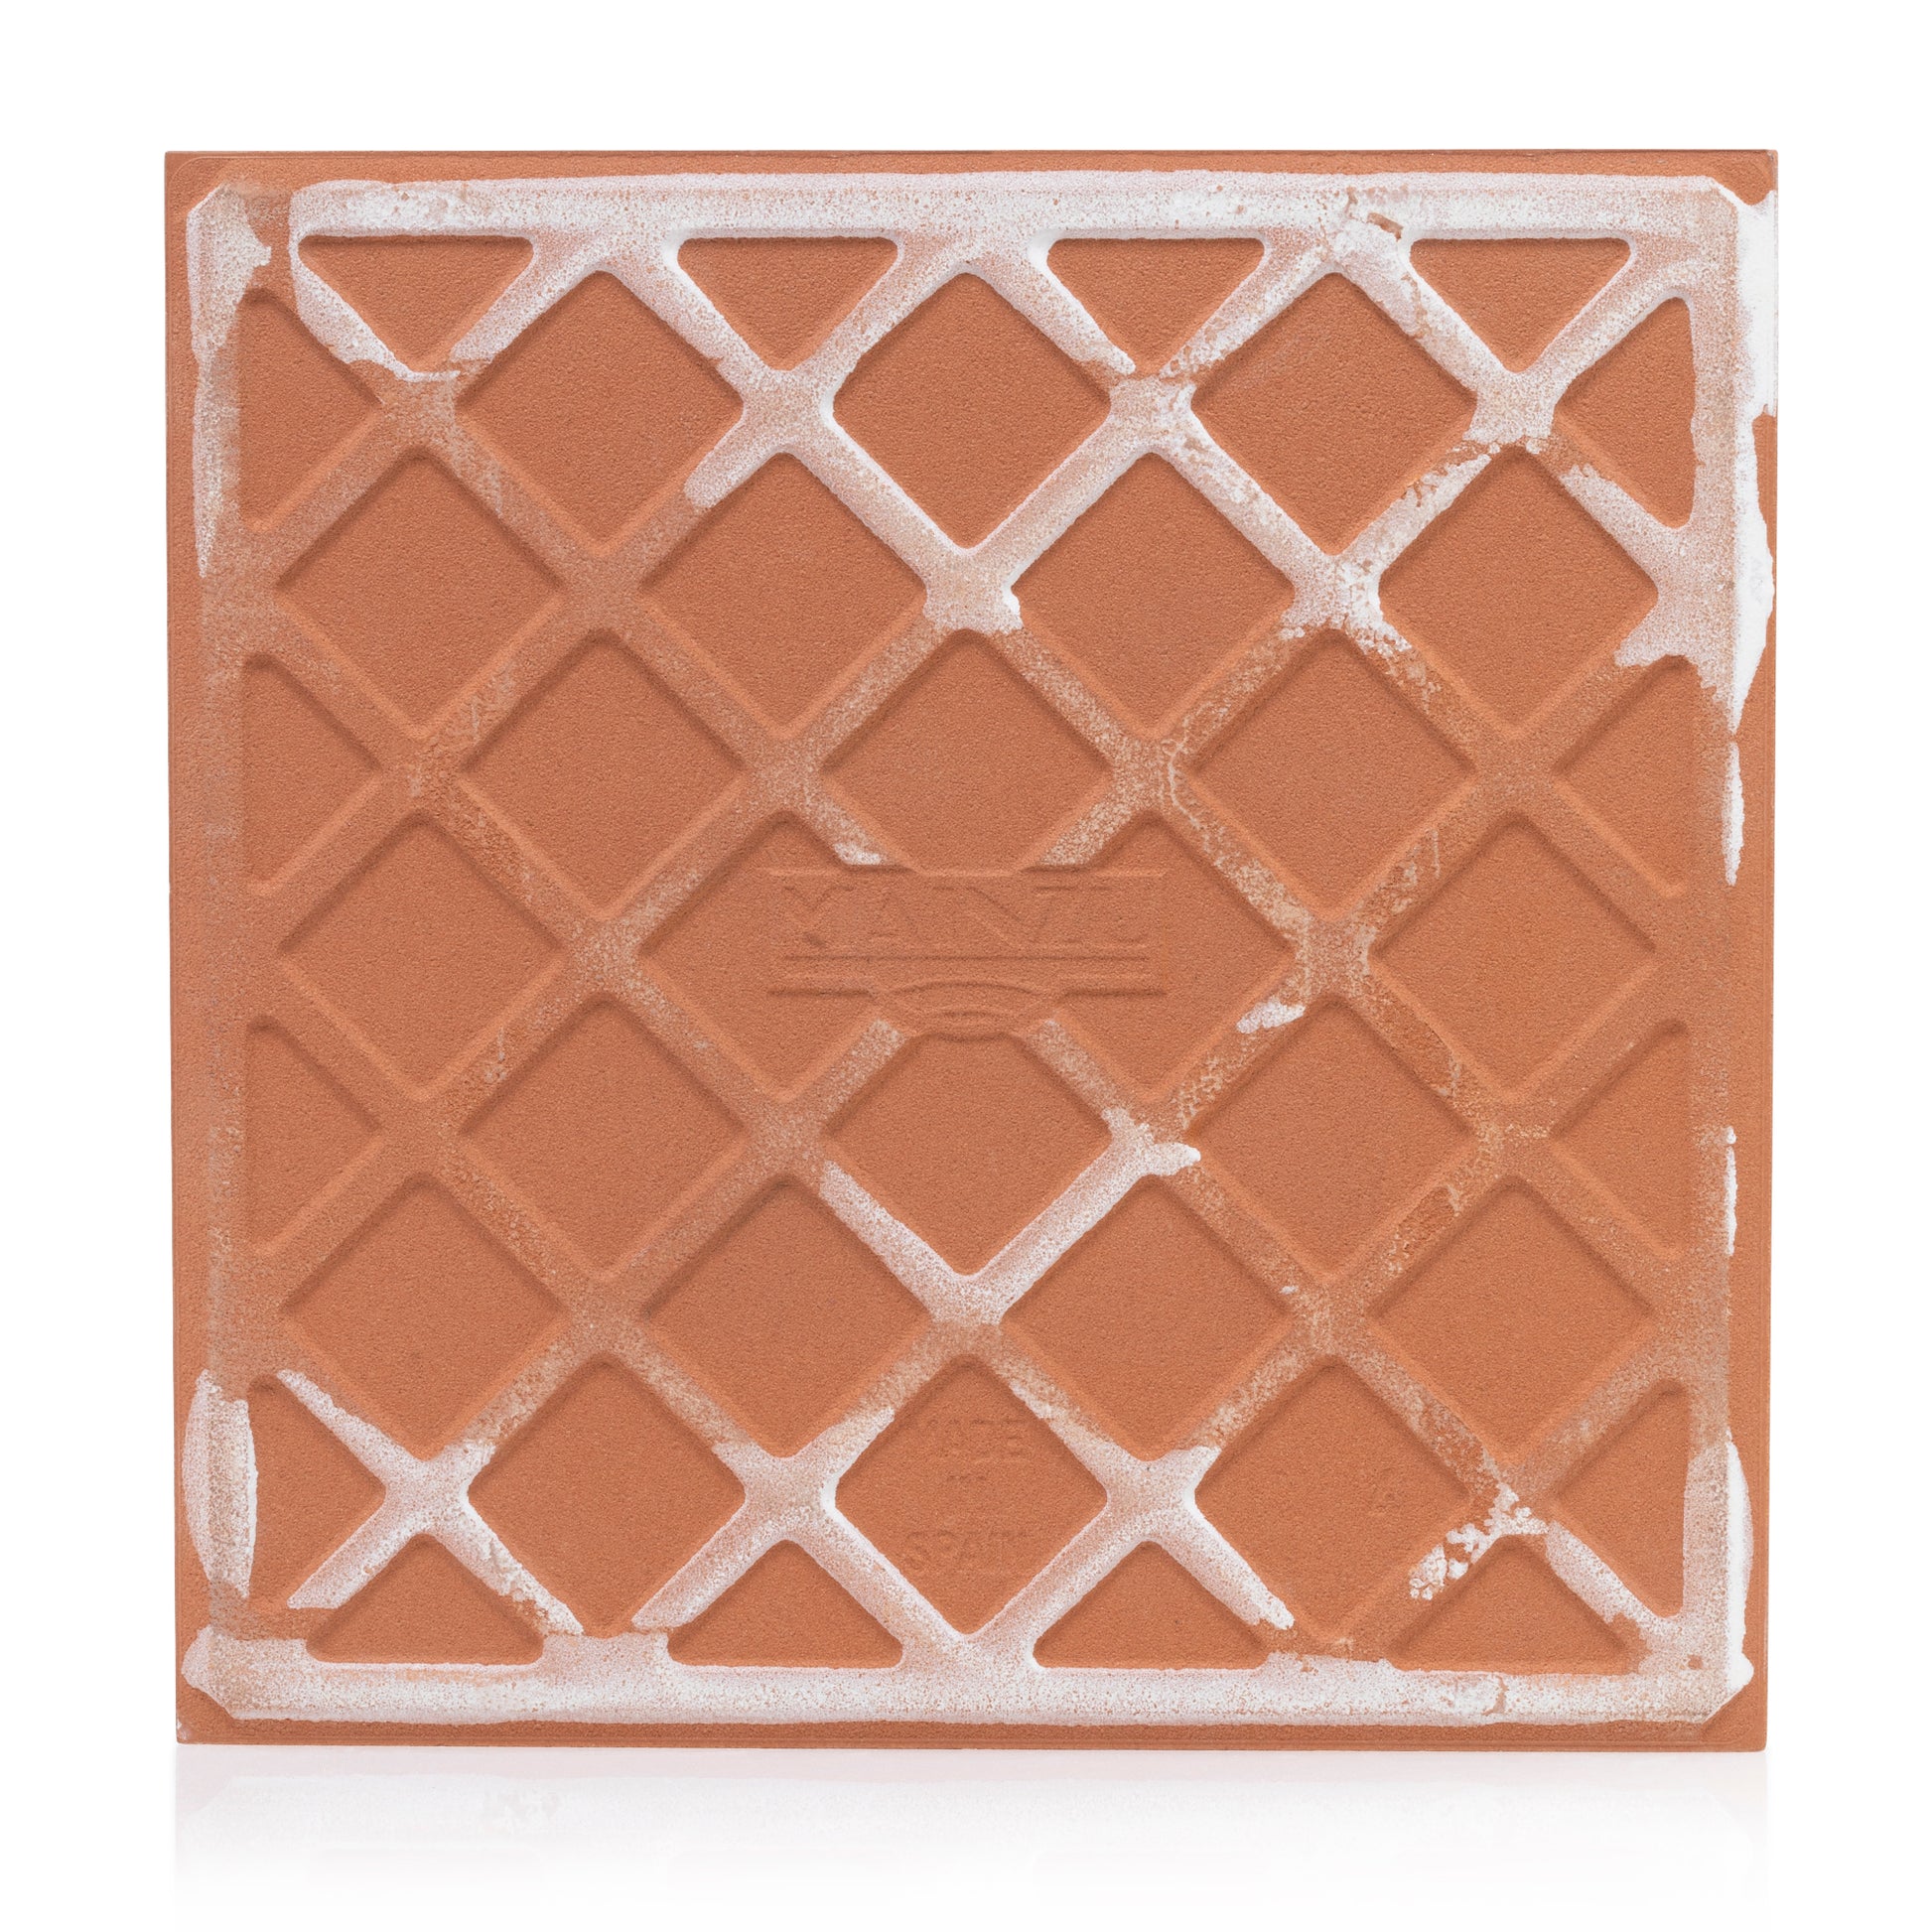 8x8 Tradition White Ceramic Tile - Industry Tile